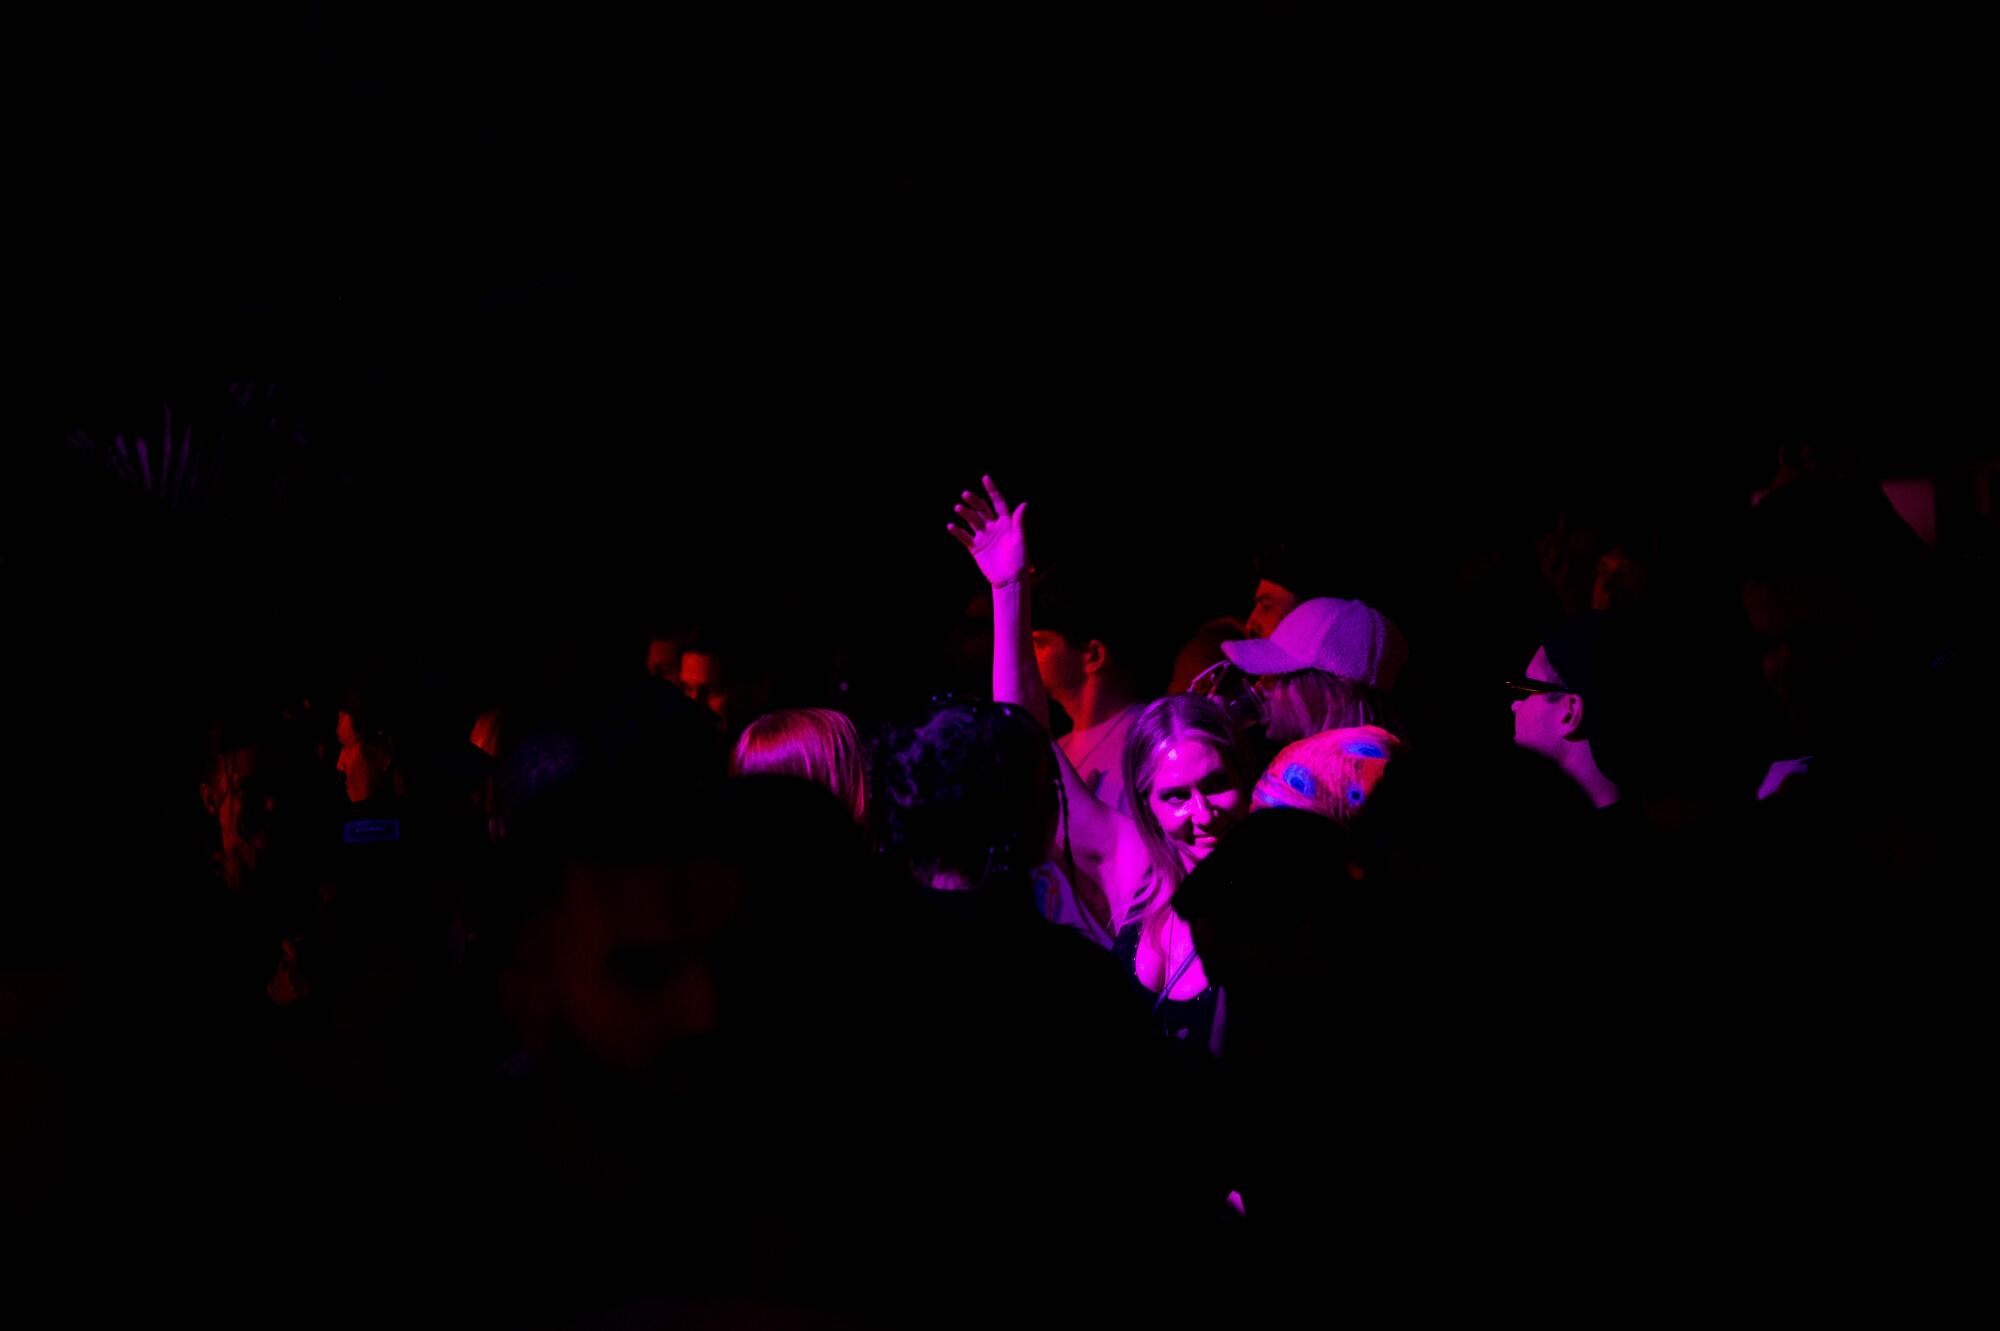 A woman is seen under a purple light dancing in a crowd.